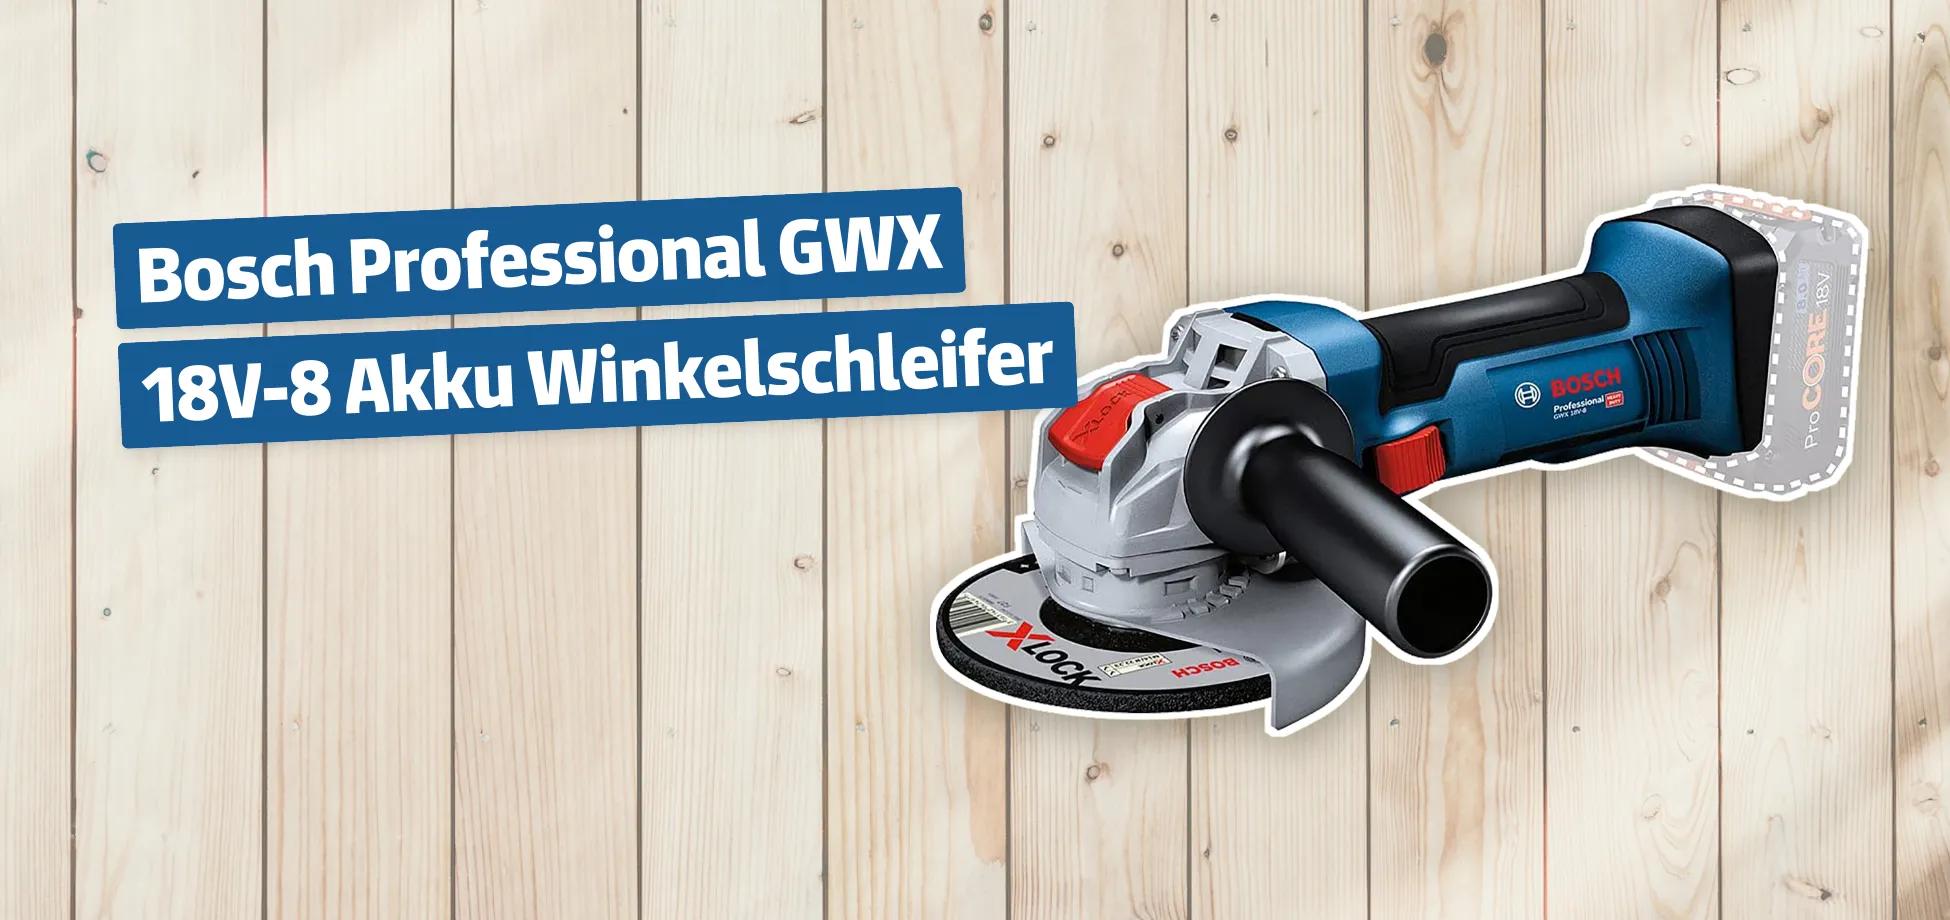 Bosch Professional GWX 18V-8 Akku Winkelschleifer